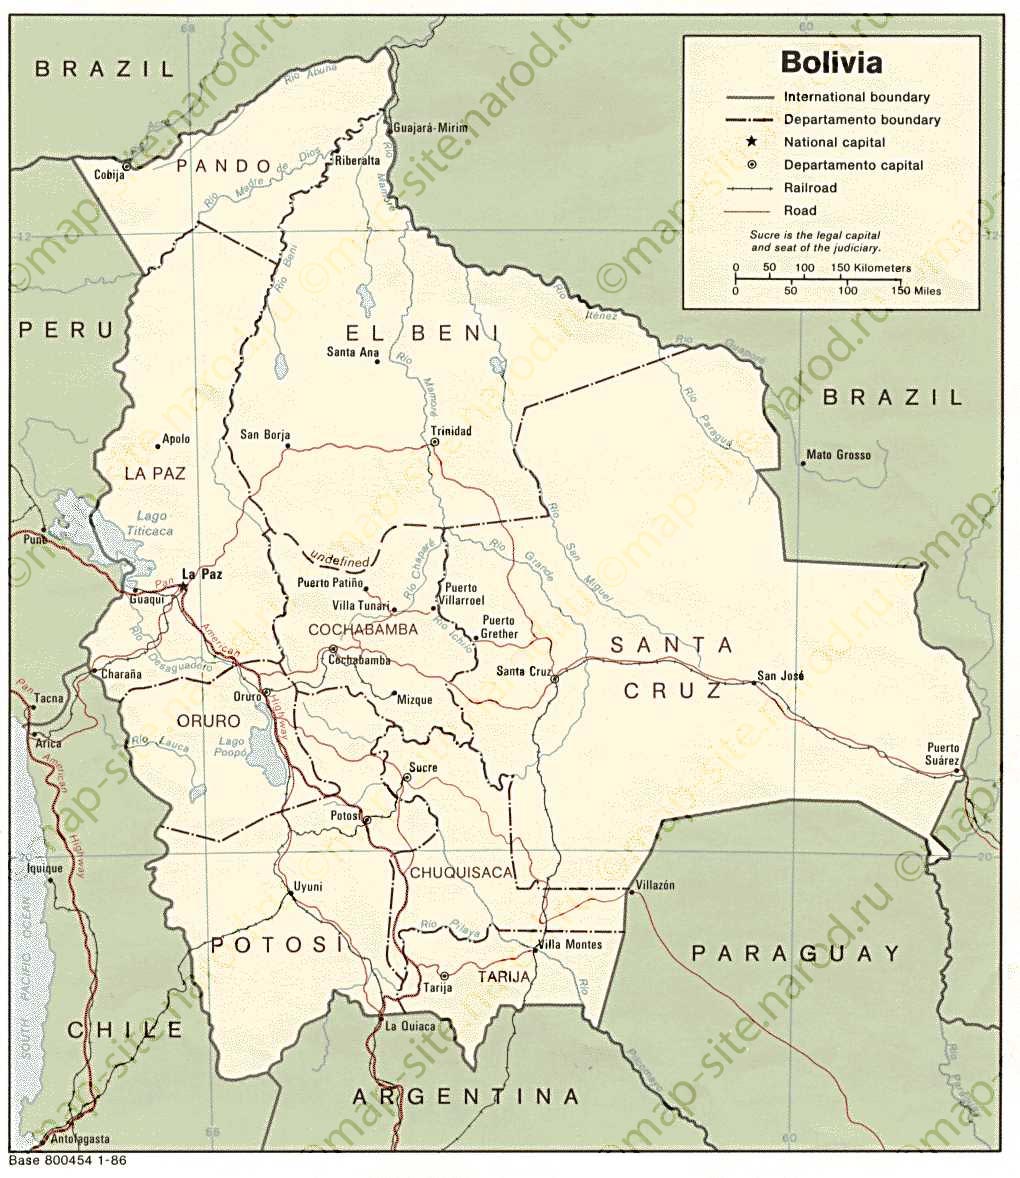 Bolivia Railway Map